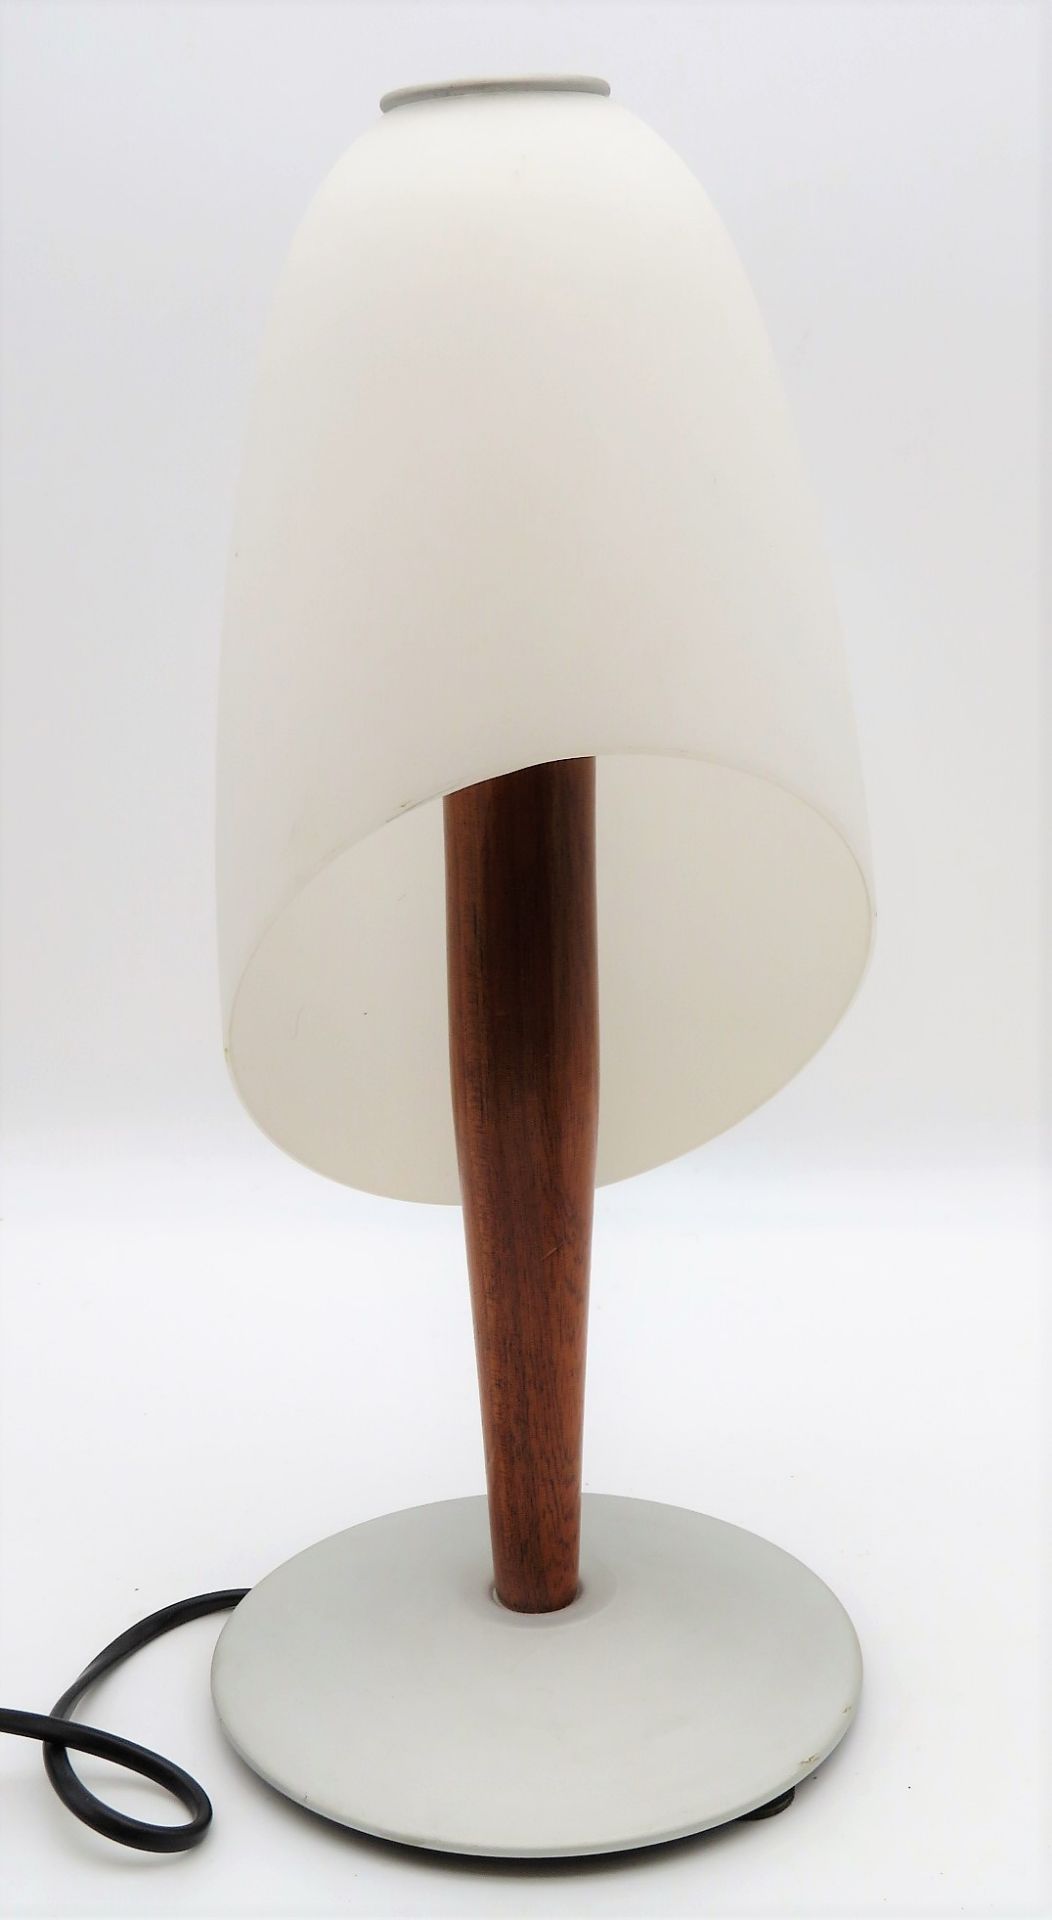 Design Tischlampe, Artemide, Entwurf Jean Marie Valery, Modell Arpasia Notte, mattierter Glasschirm